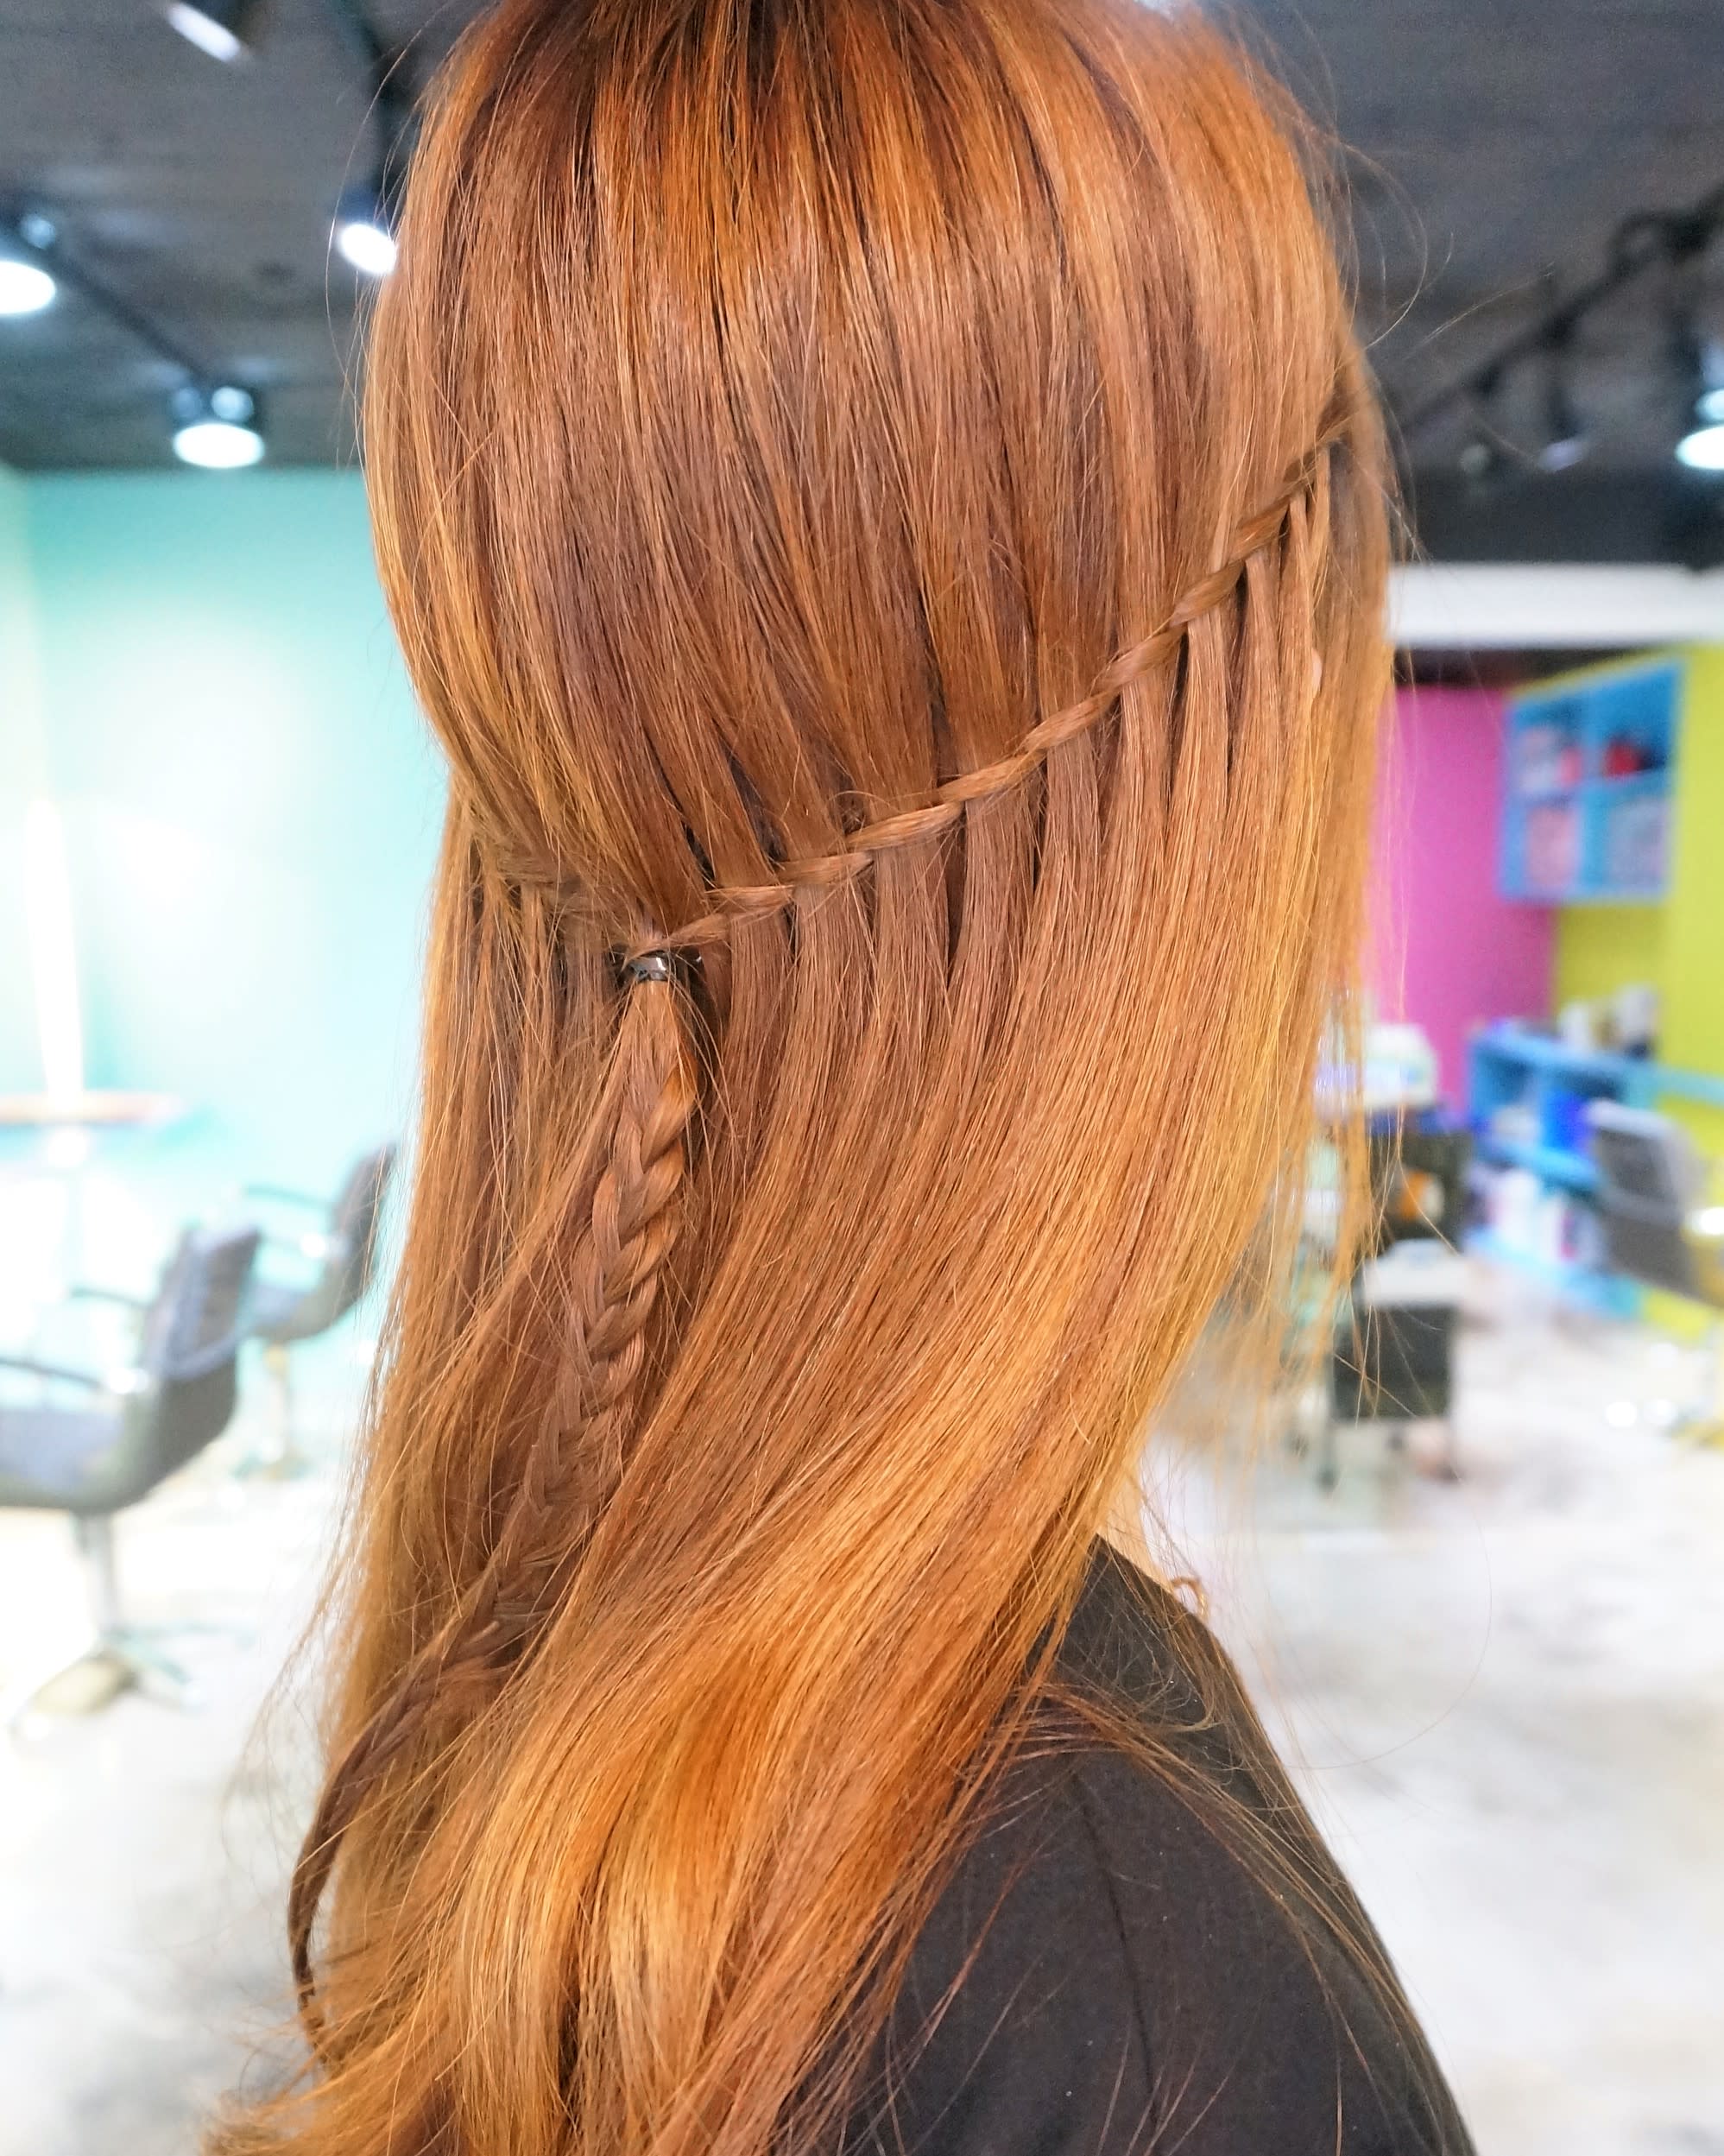 RULeR Hair Dressing【ルーラーヘアドレッシング】のスタイル紹介。ウォーターフォール編み込みアレンジ